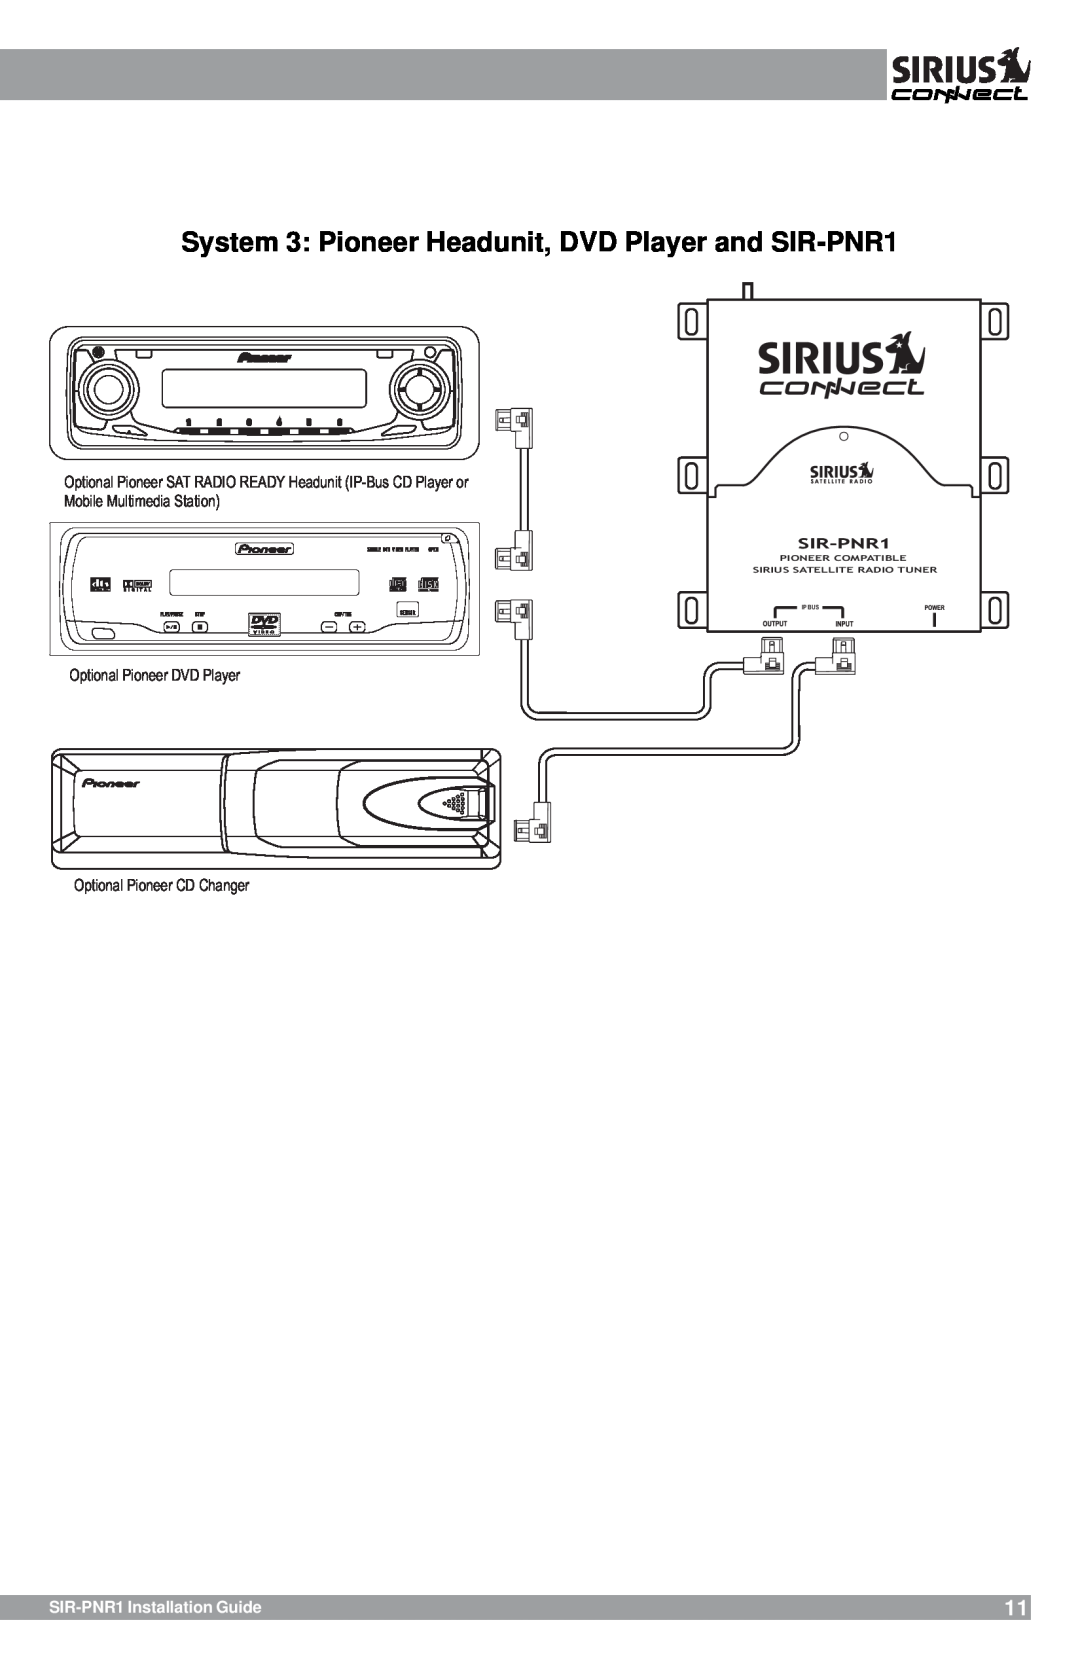 Sirius Satellite Radio SIR-PNR1 manual Mobile Multimedia Station, Optional Pioneer DVD Player, Optional Pioneer CD Changer 